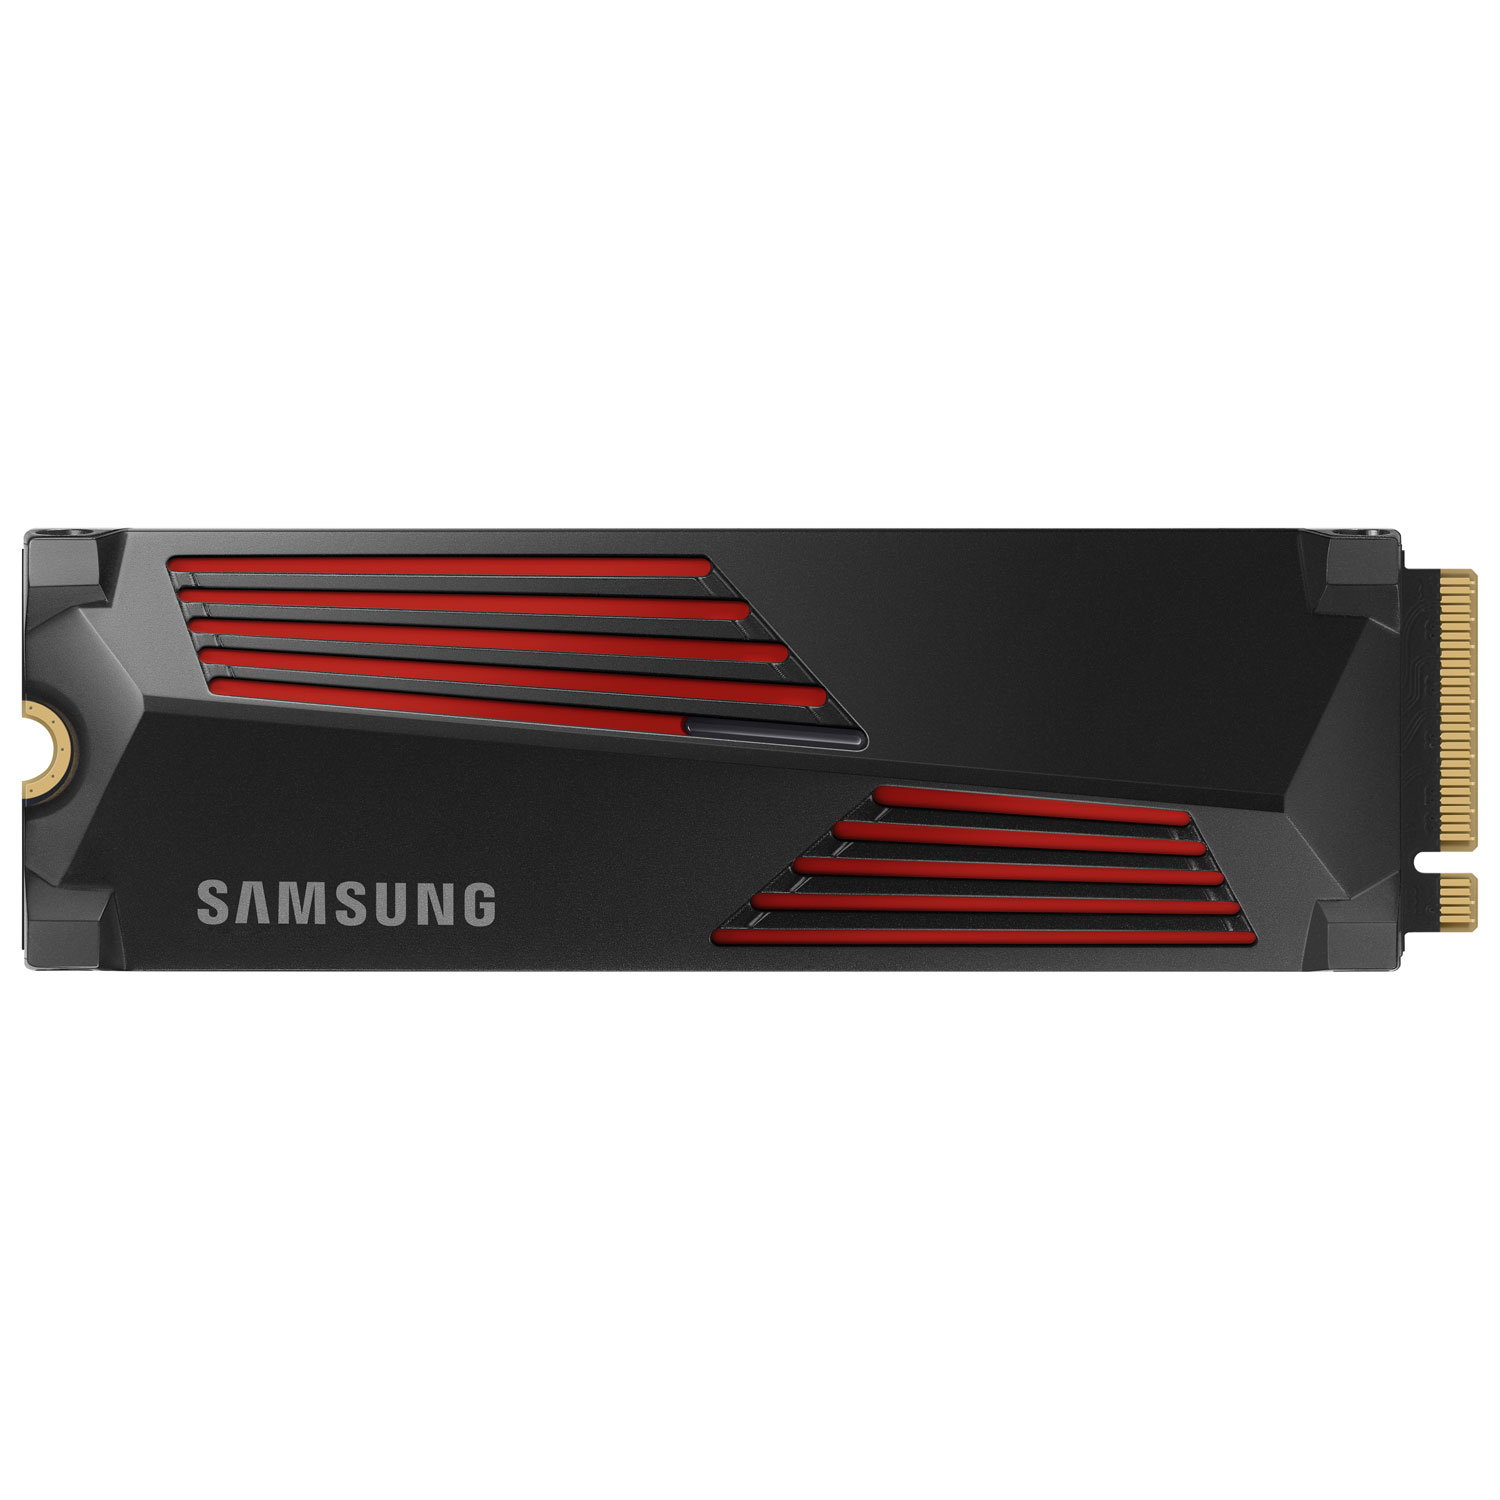 Samsung 990 PRO 2TB NVMe PCI-e Internal Solid State Drive (MZ-V9P2T0CWF) - Black/Red